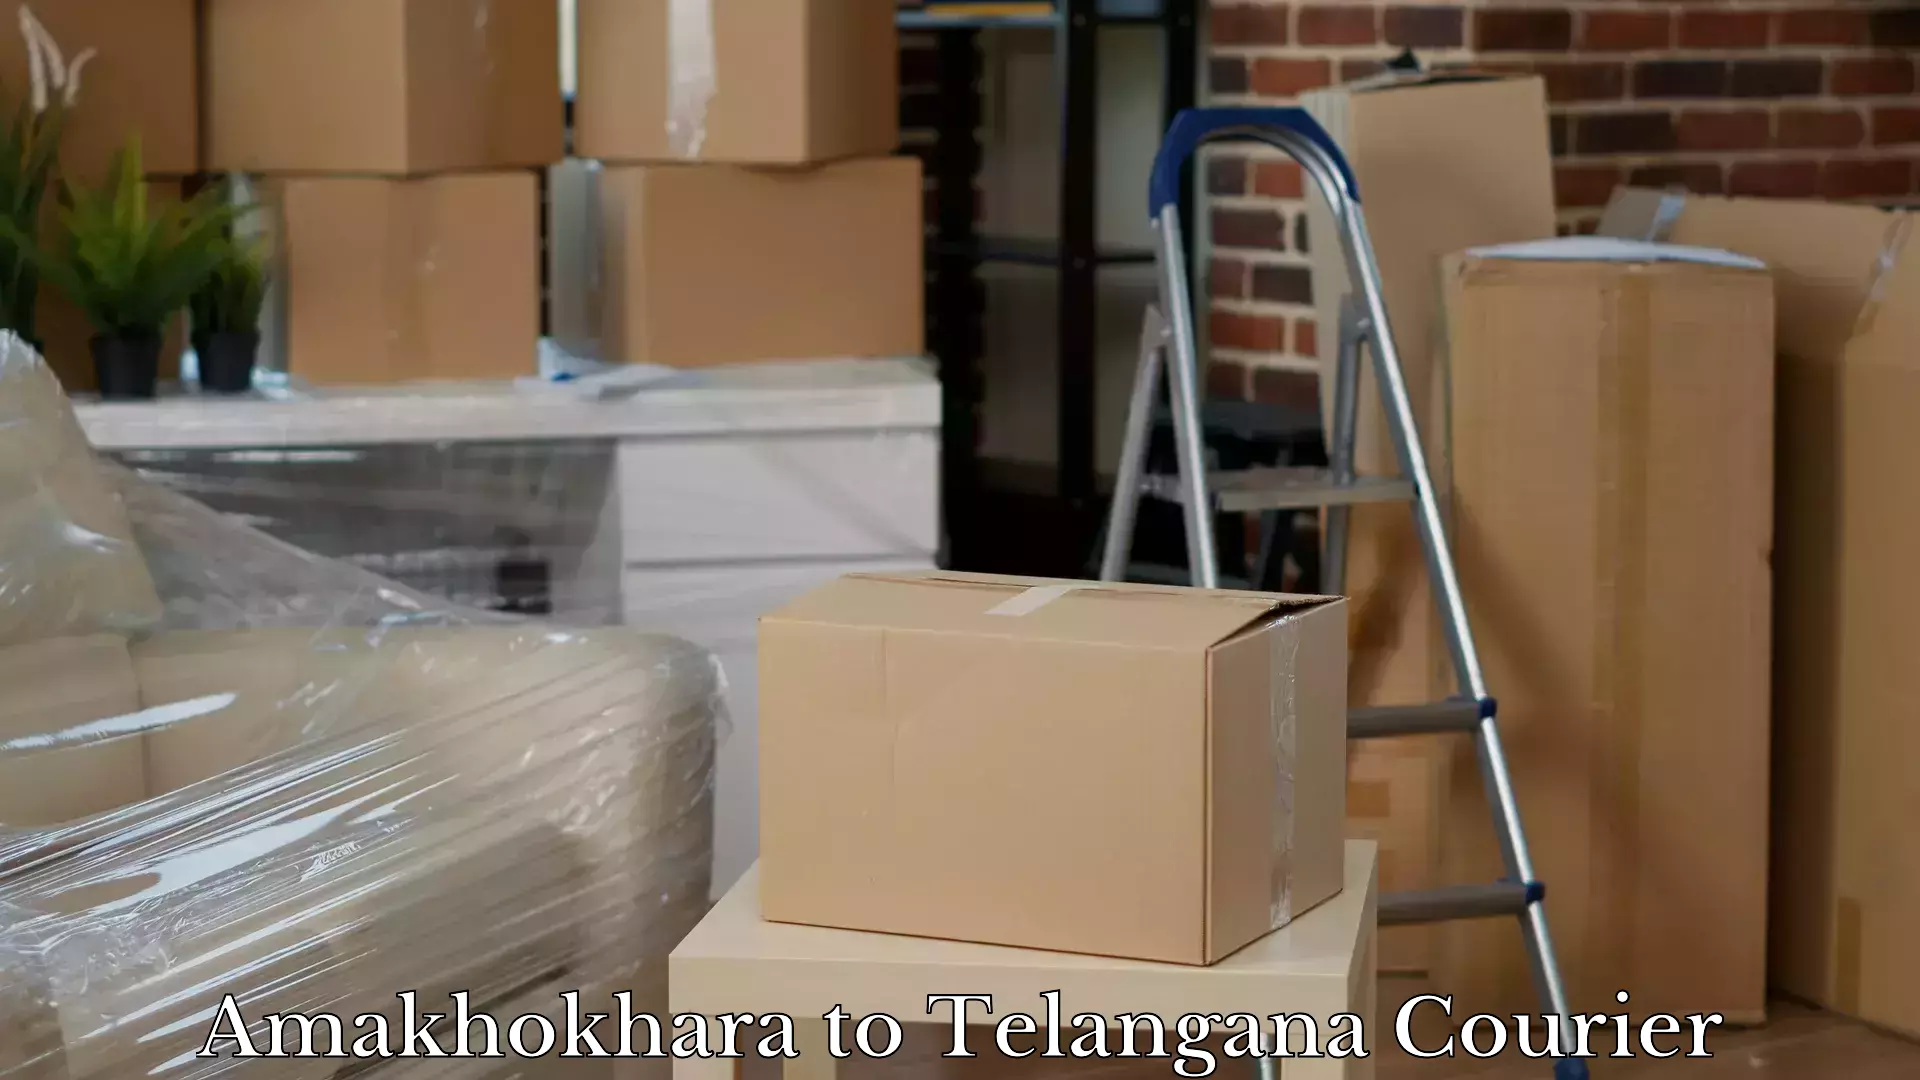 Baggage shipping experience Amakhokhara to Patancheru